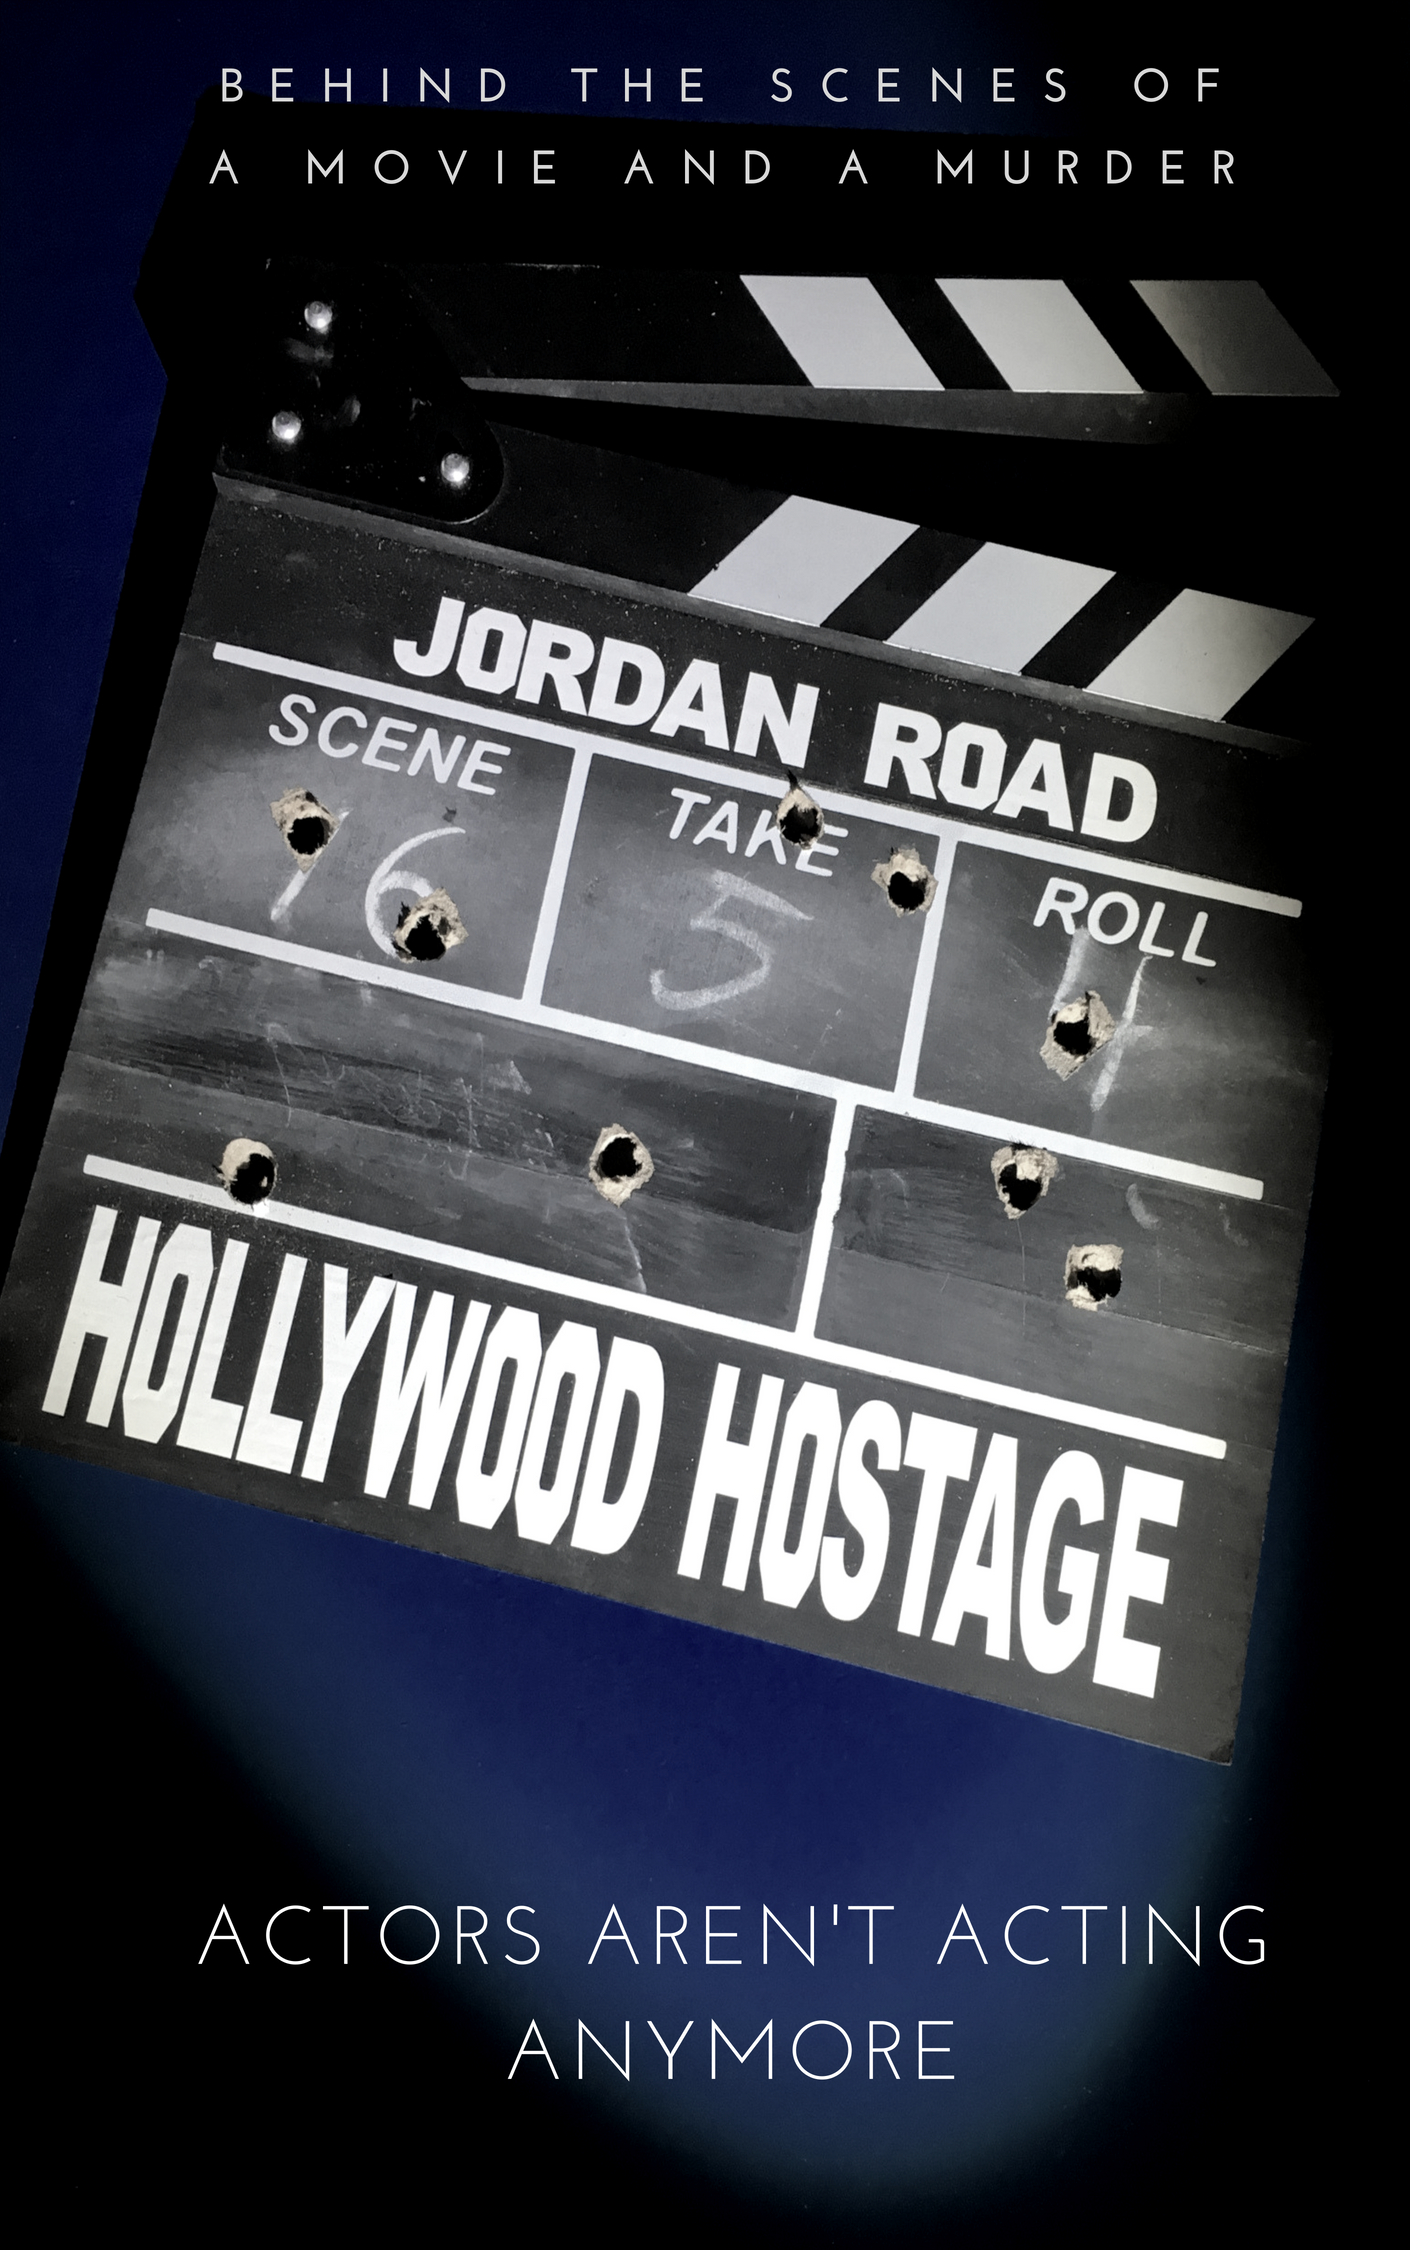 Hollywood Hostage